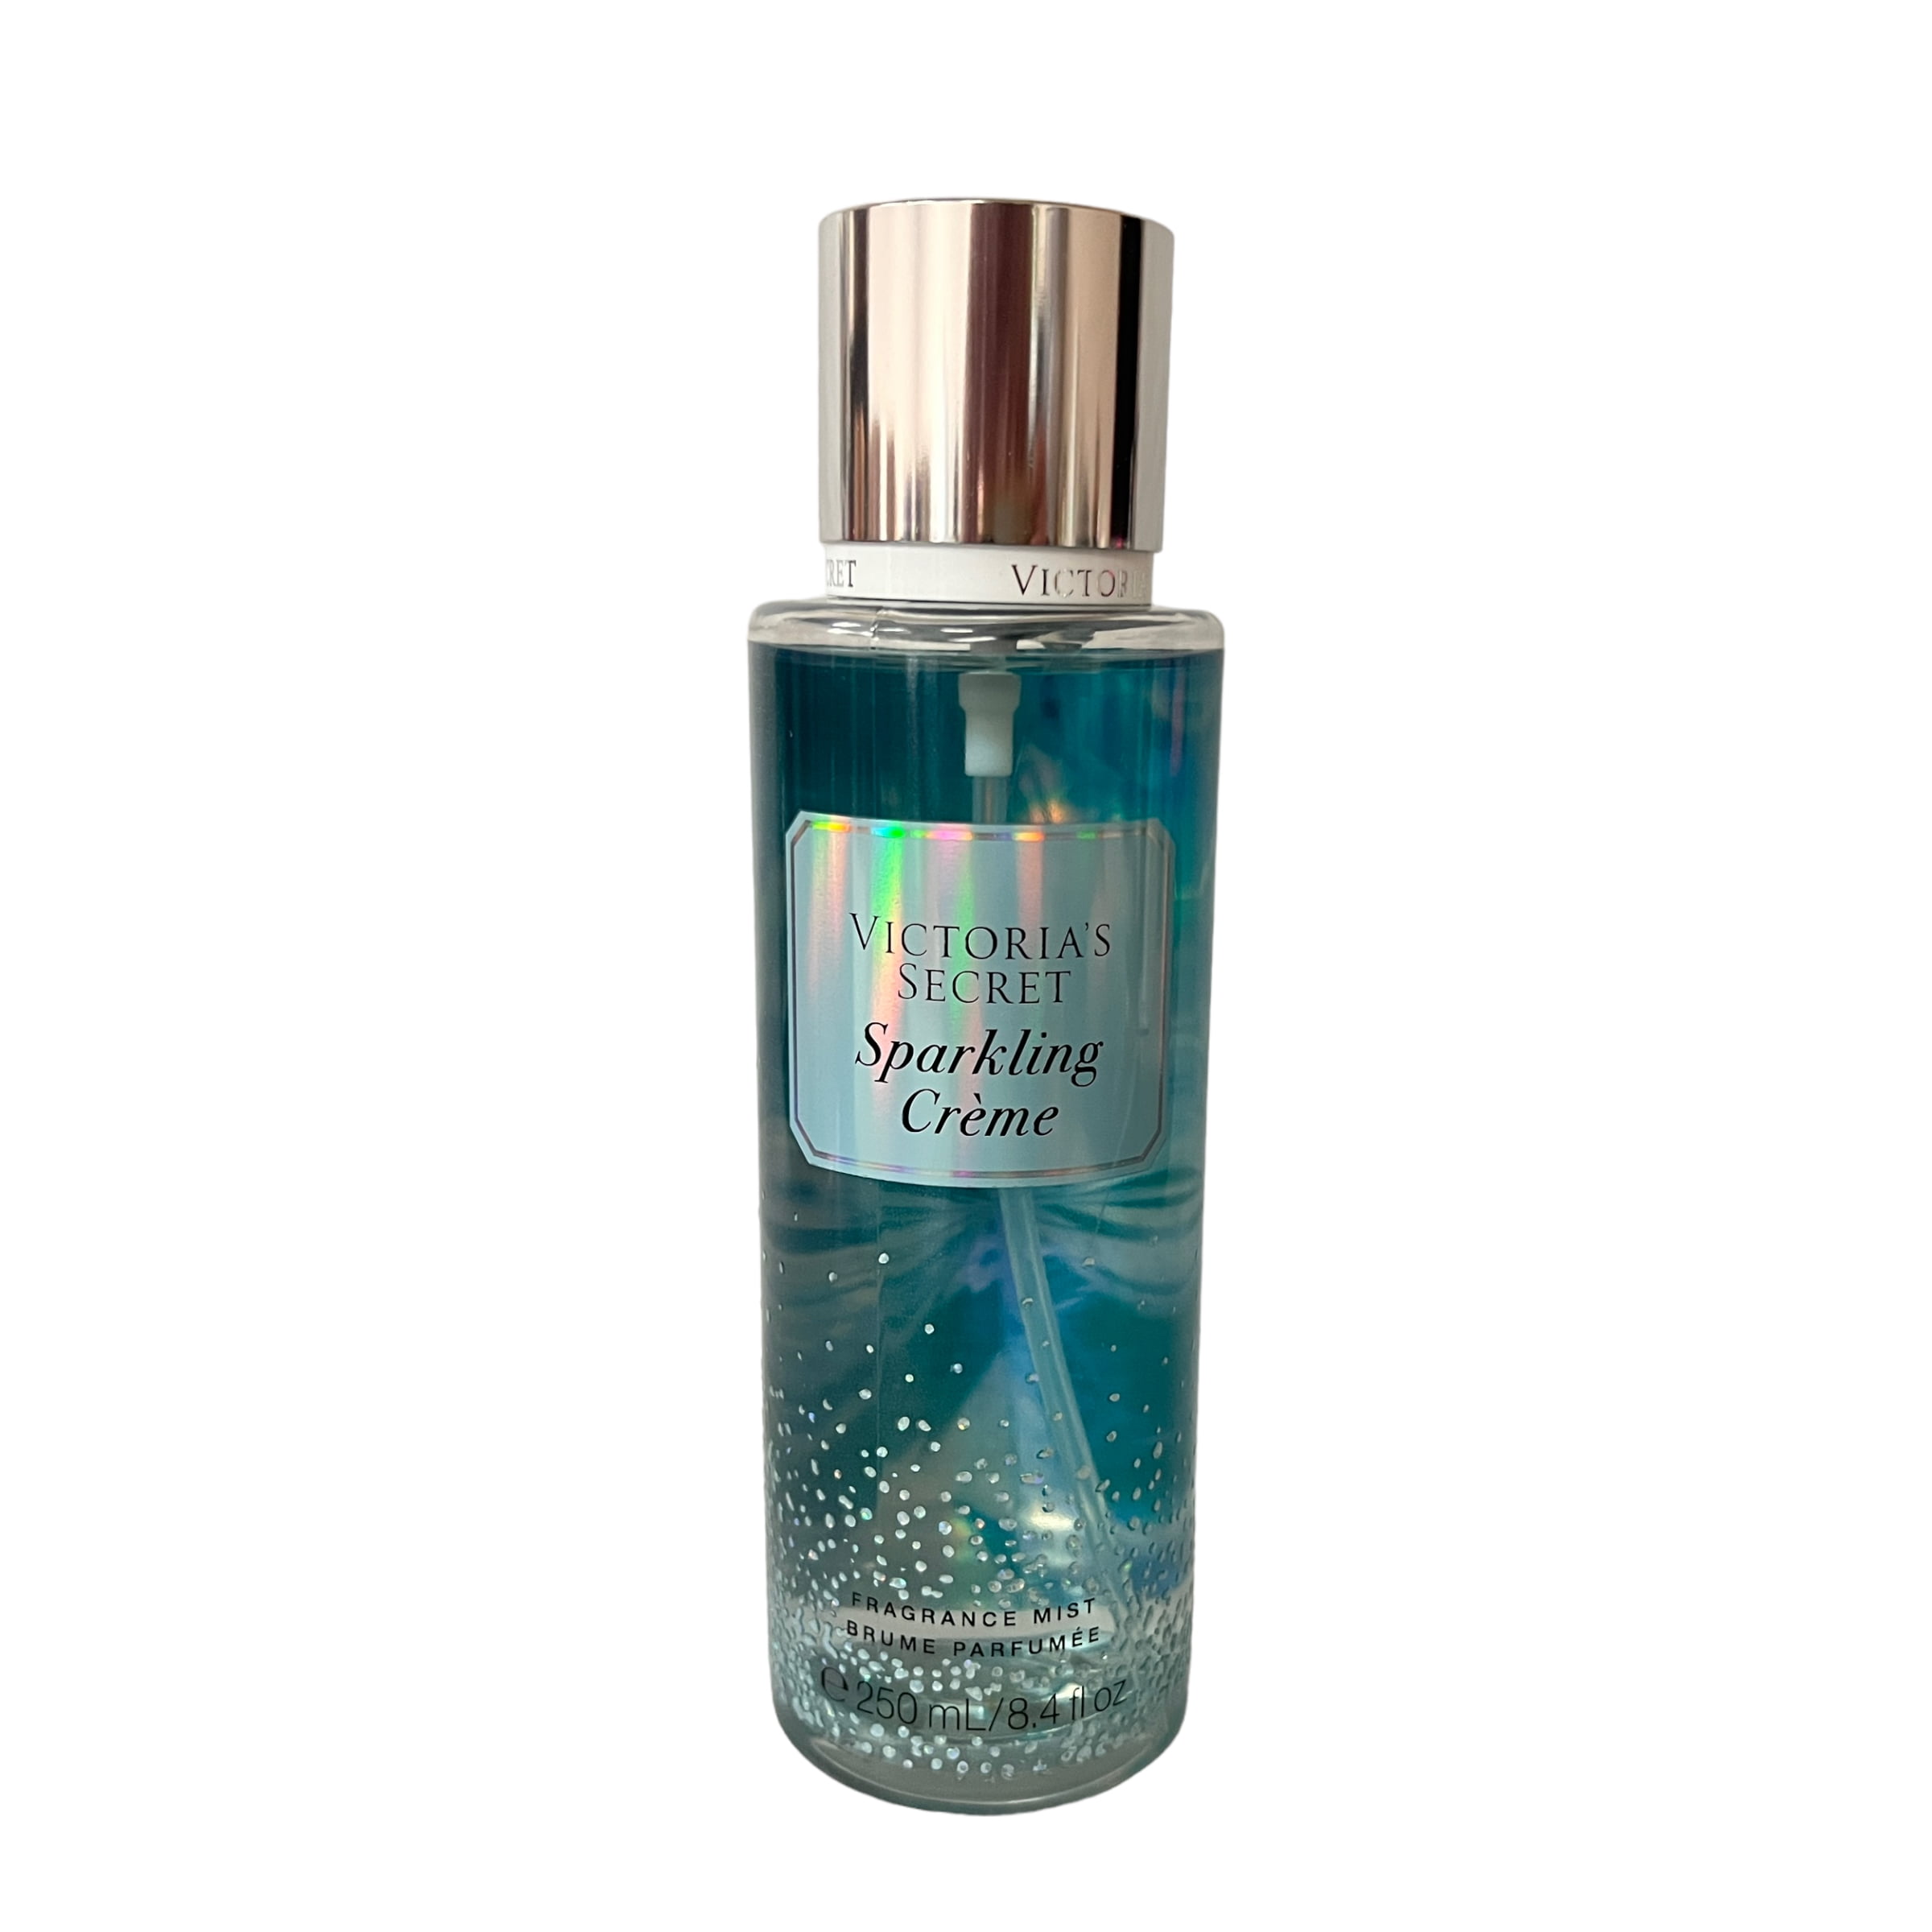 Victoria's Secret Sparkling Creme Fragrance Mist 8.4 fl oz